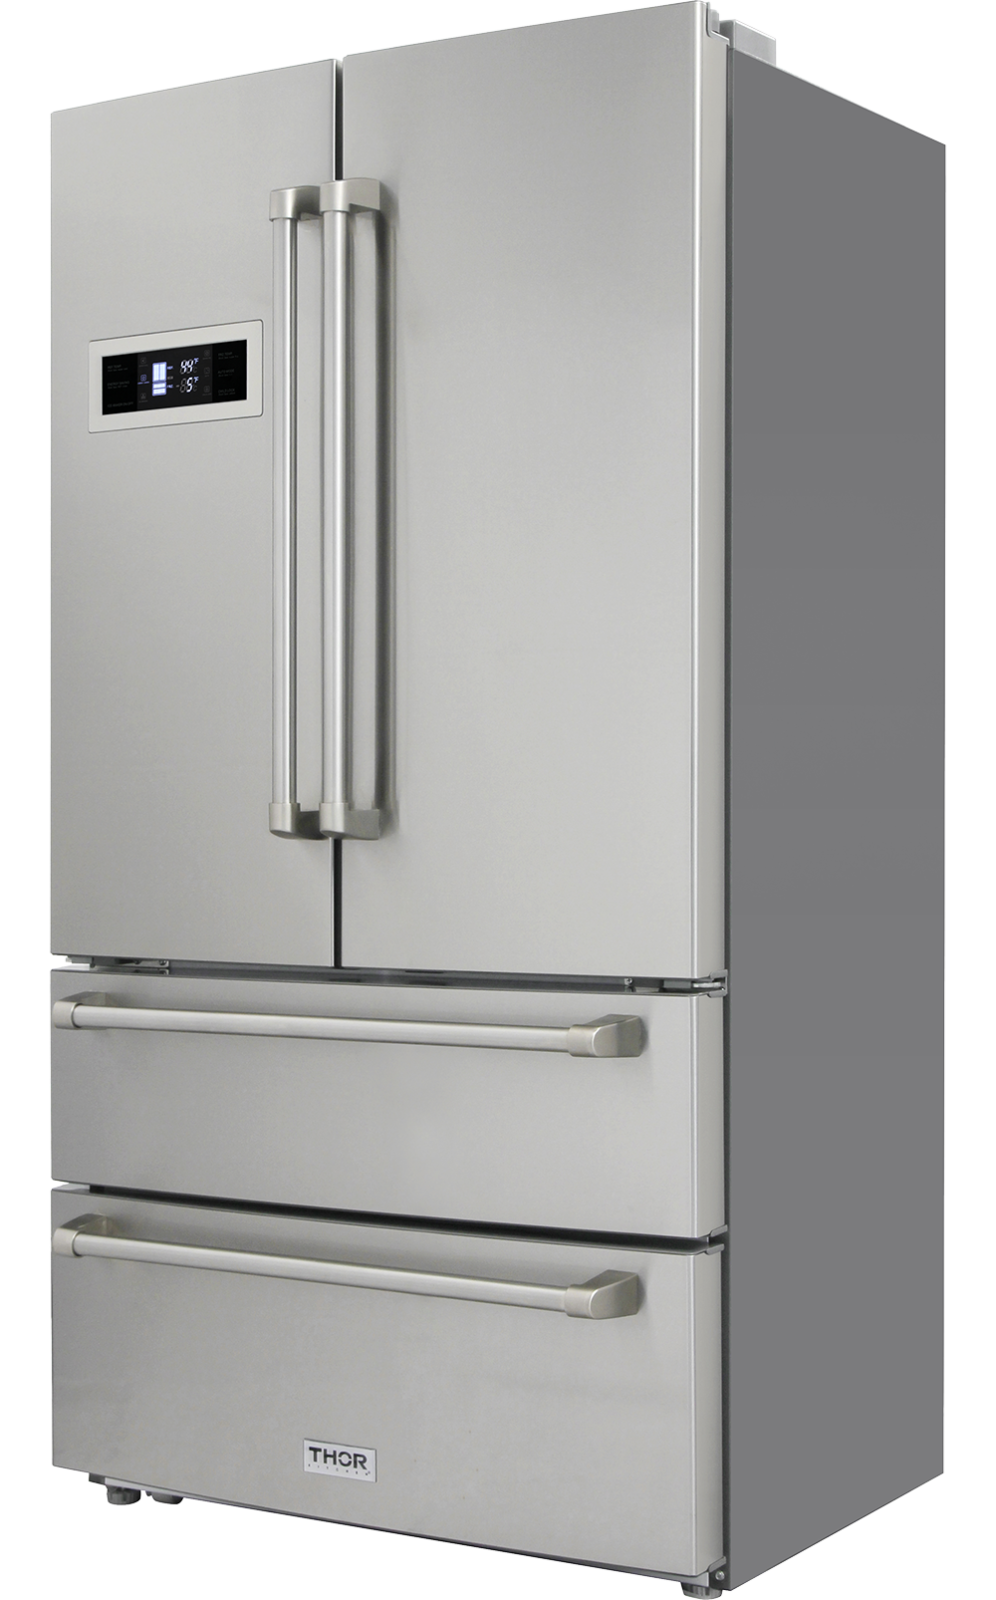 Thor French Door Refrigerator